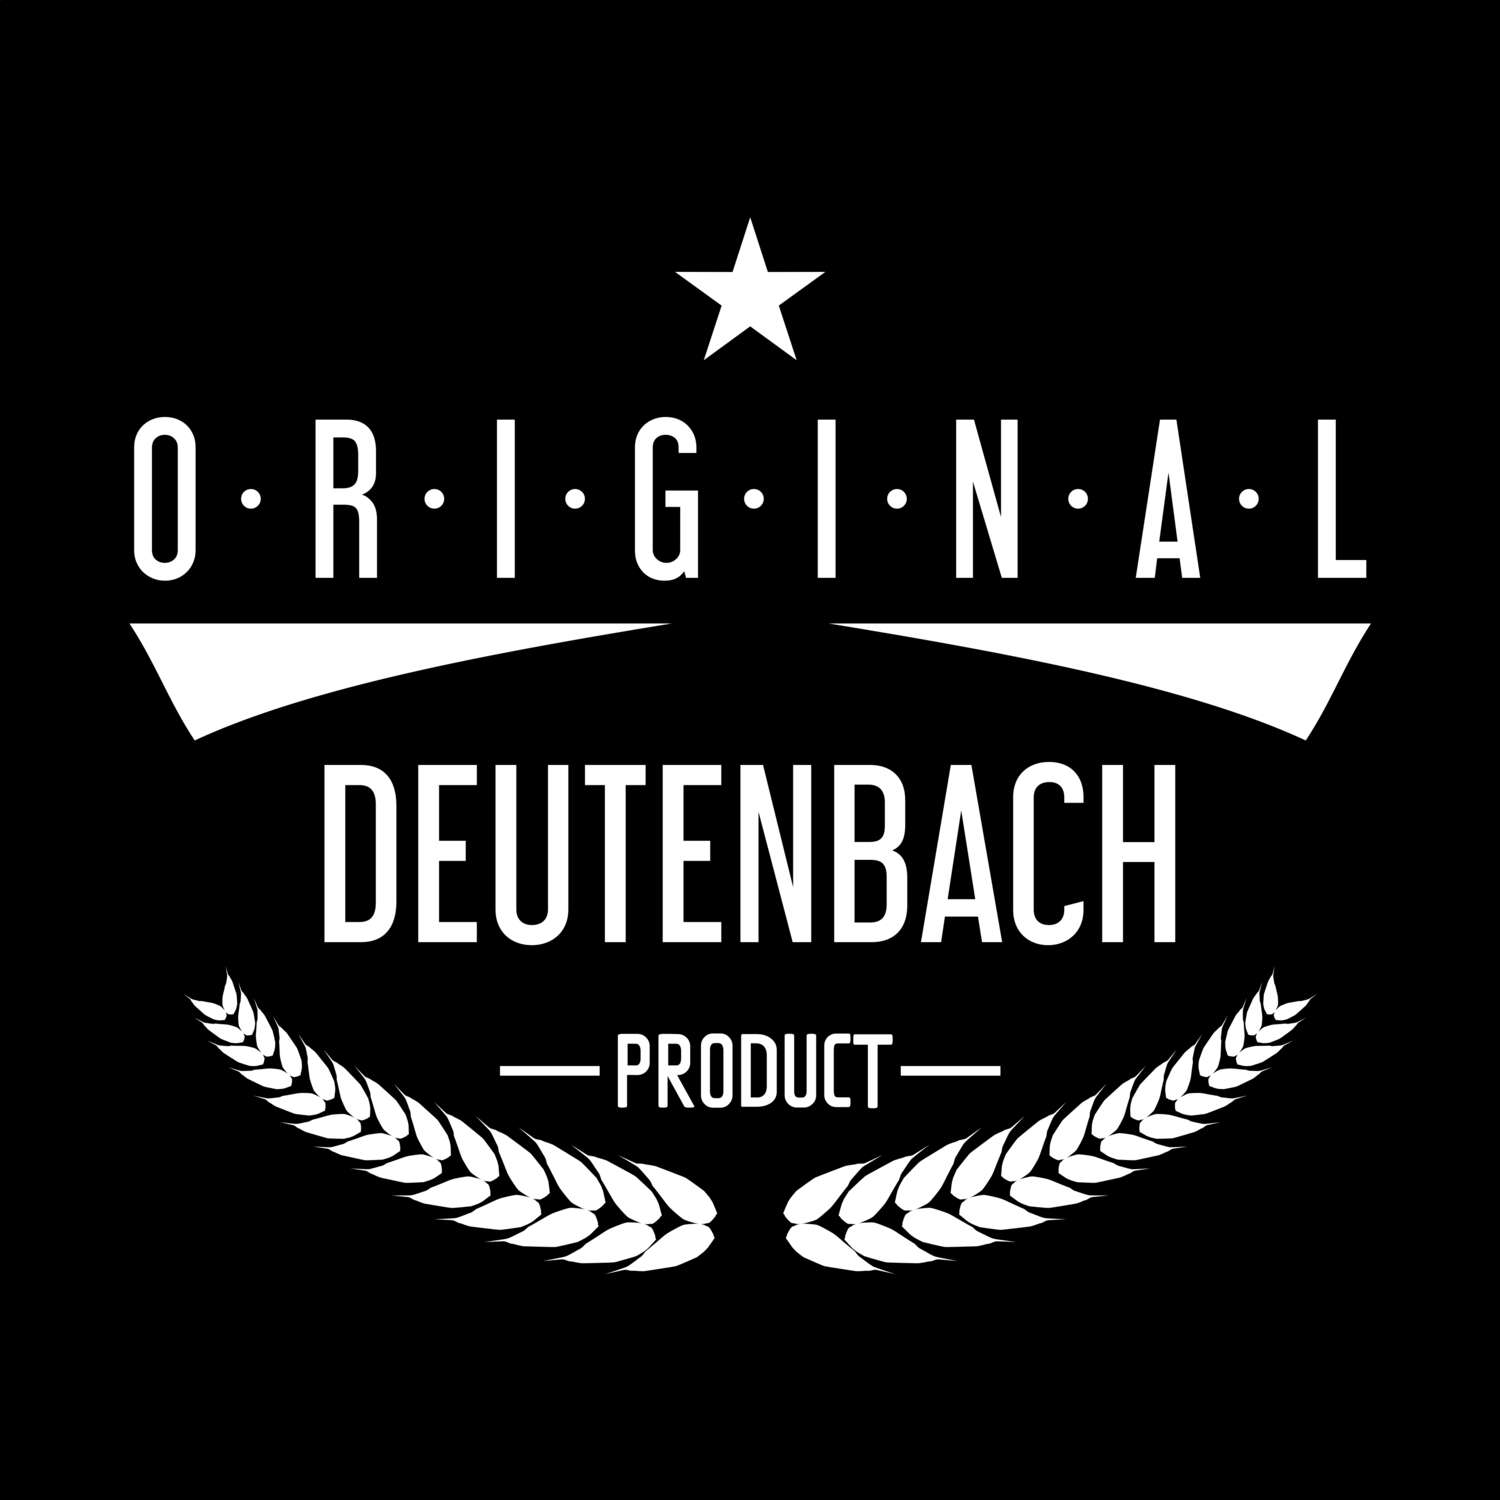 Deutenbach T-Shirt »Original Product«